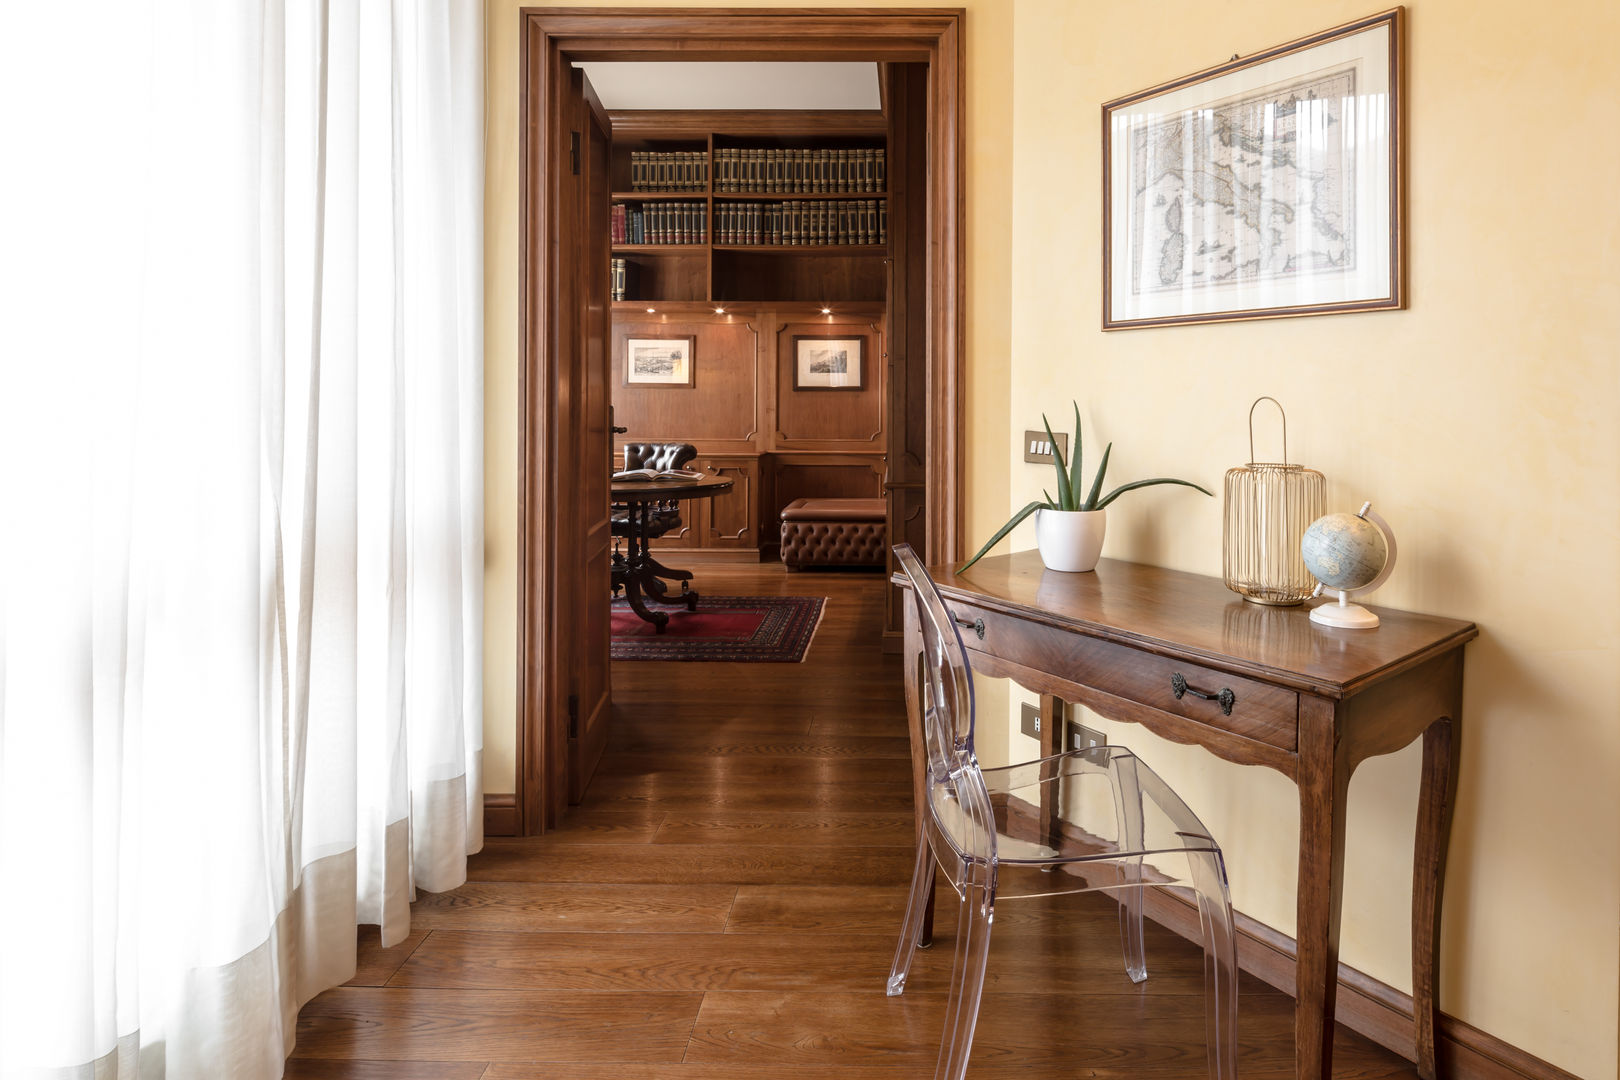 Casa Q2 - Relooking, Architrek Architrek Salas de estar clássicas